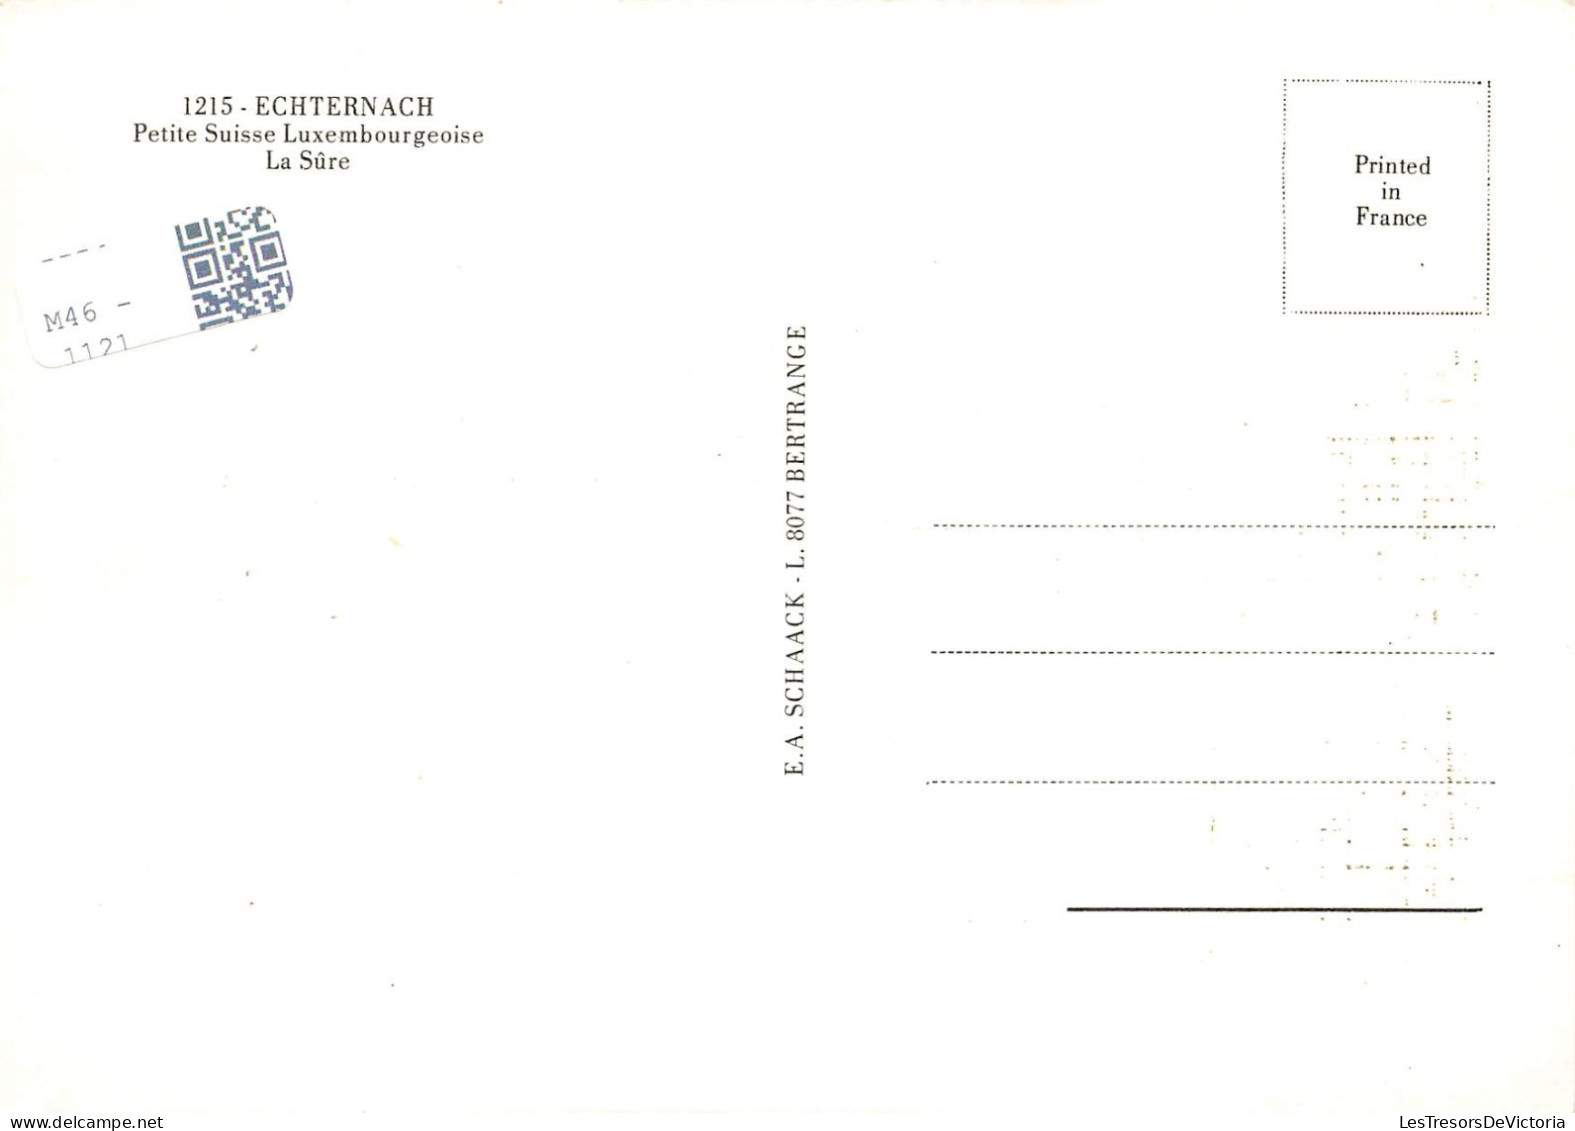 LUXEMBOURG - Echternach - La Sûre - Petite Suisse Luxembourgeoise - Carte Postale - Echternach